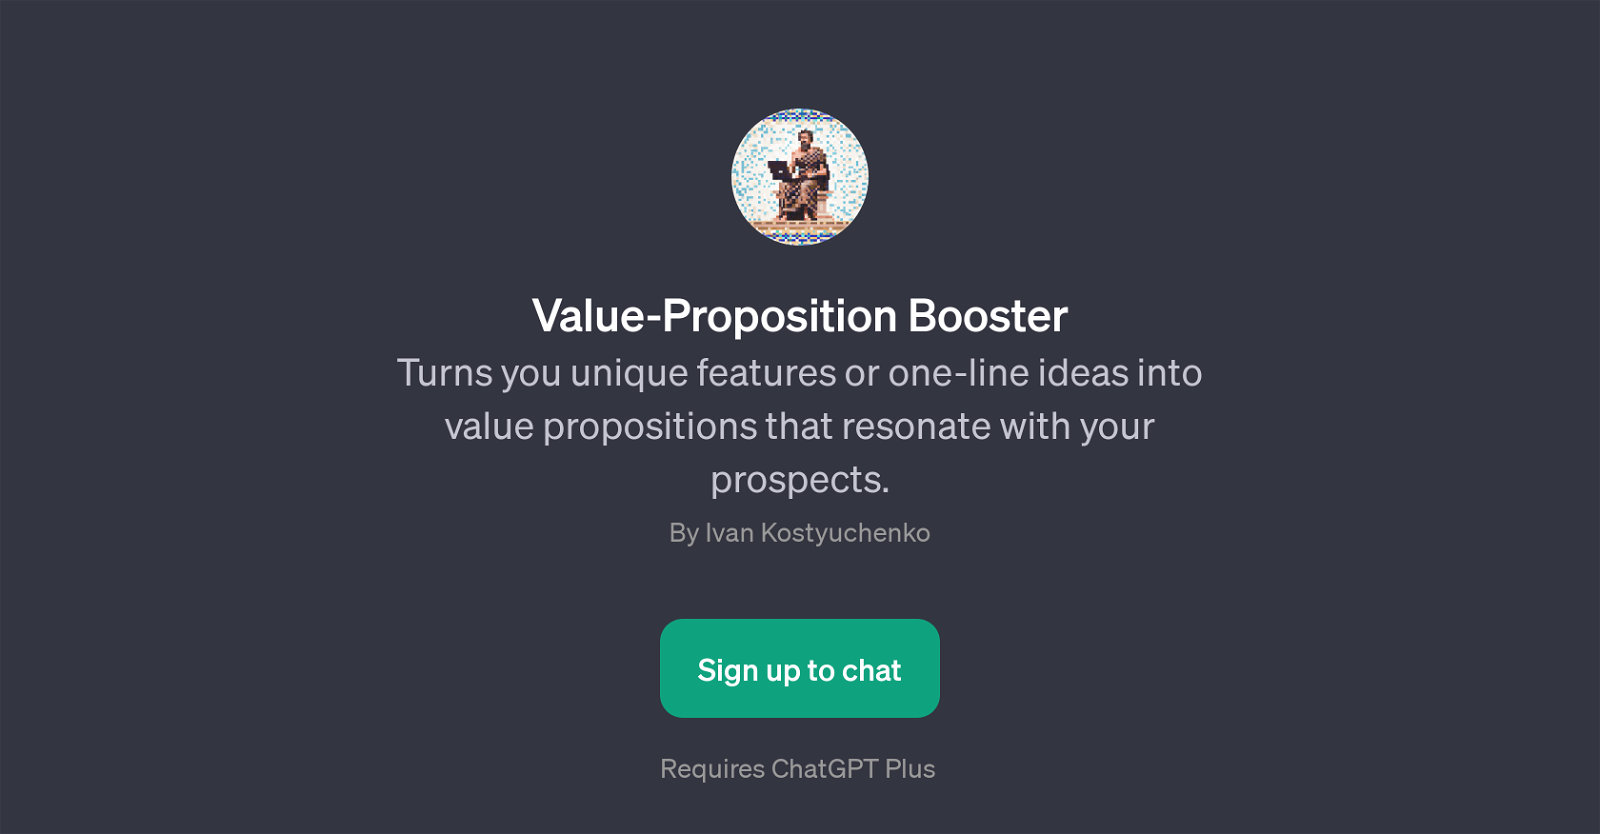 Value-Proposition Booster website